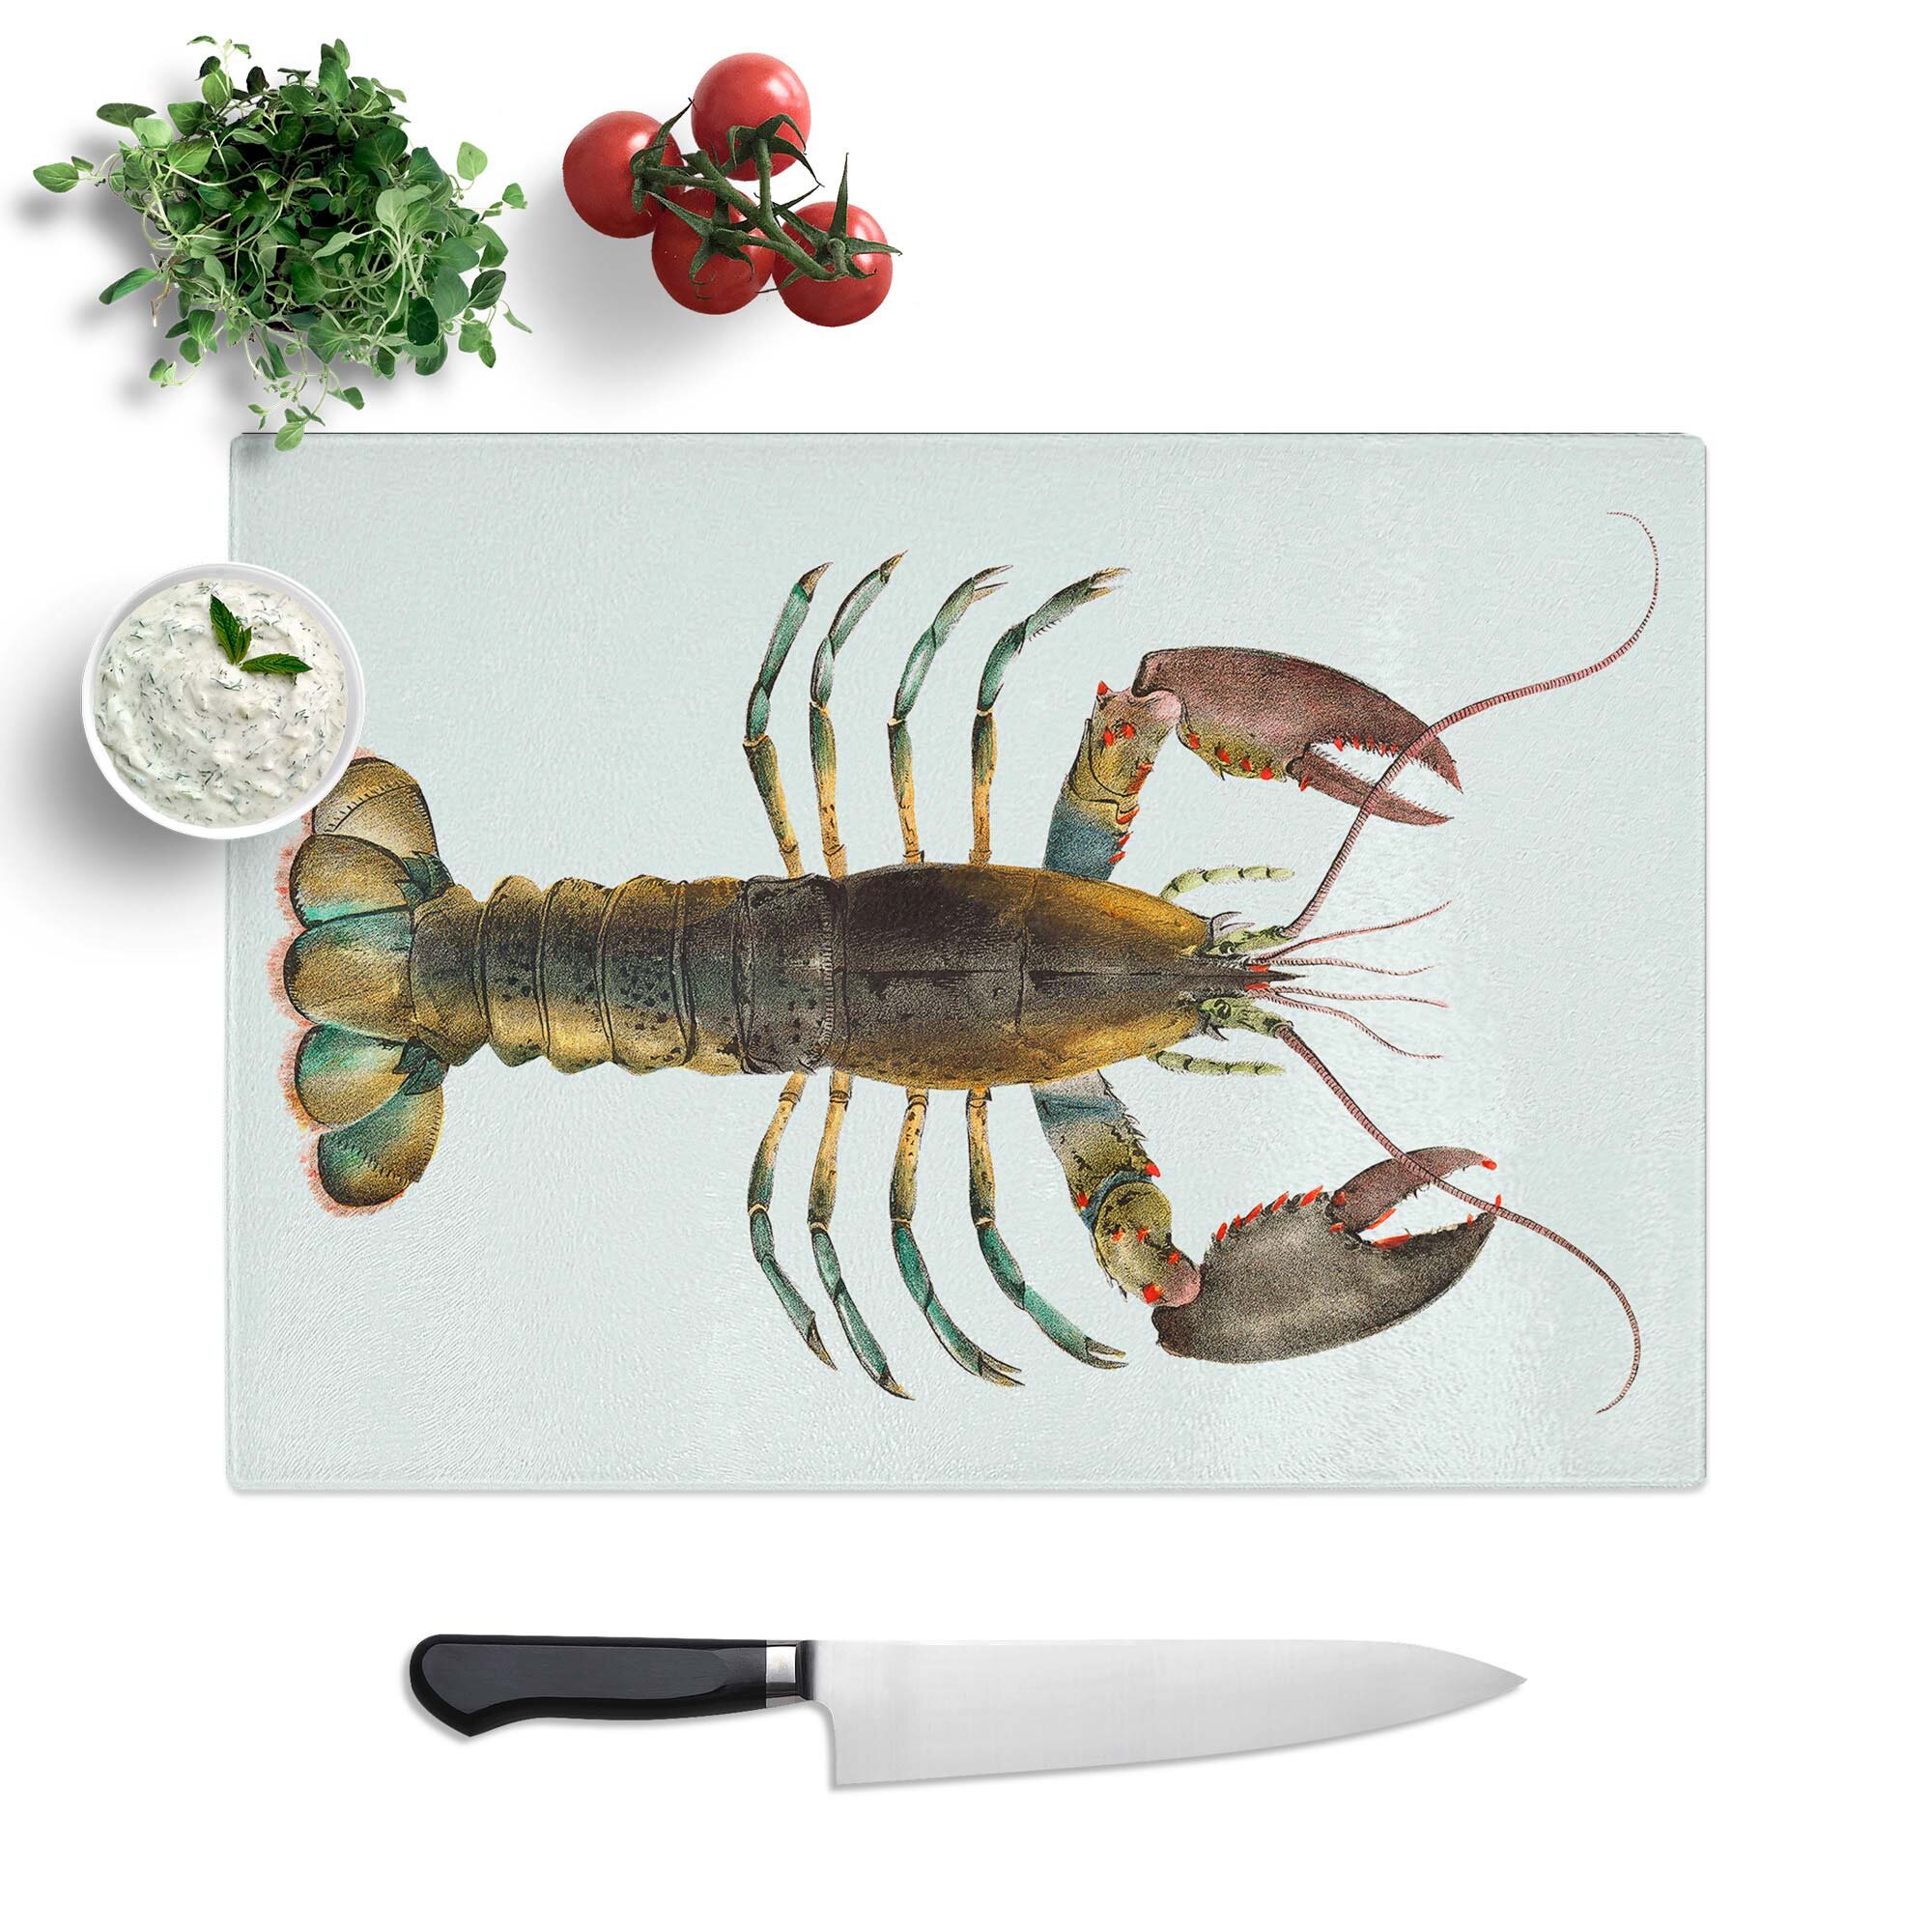 Kays lobster